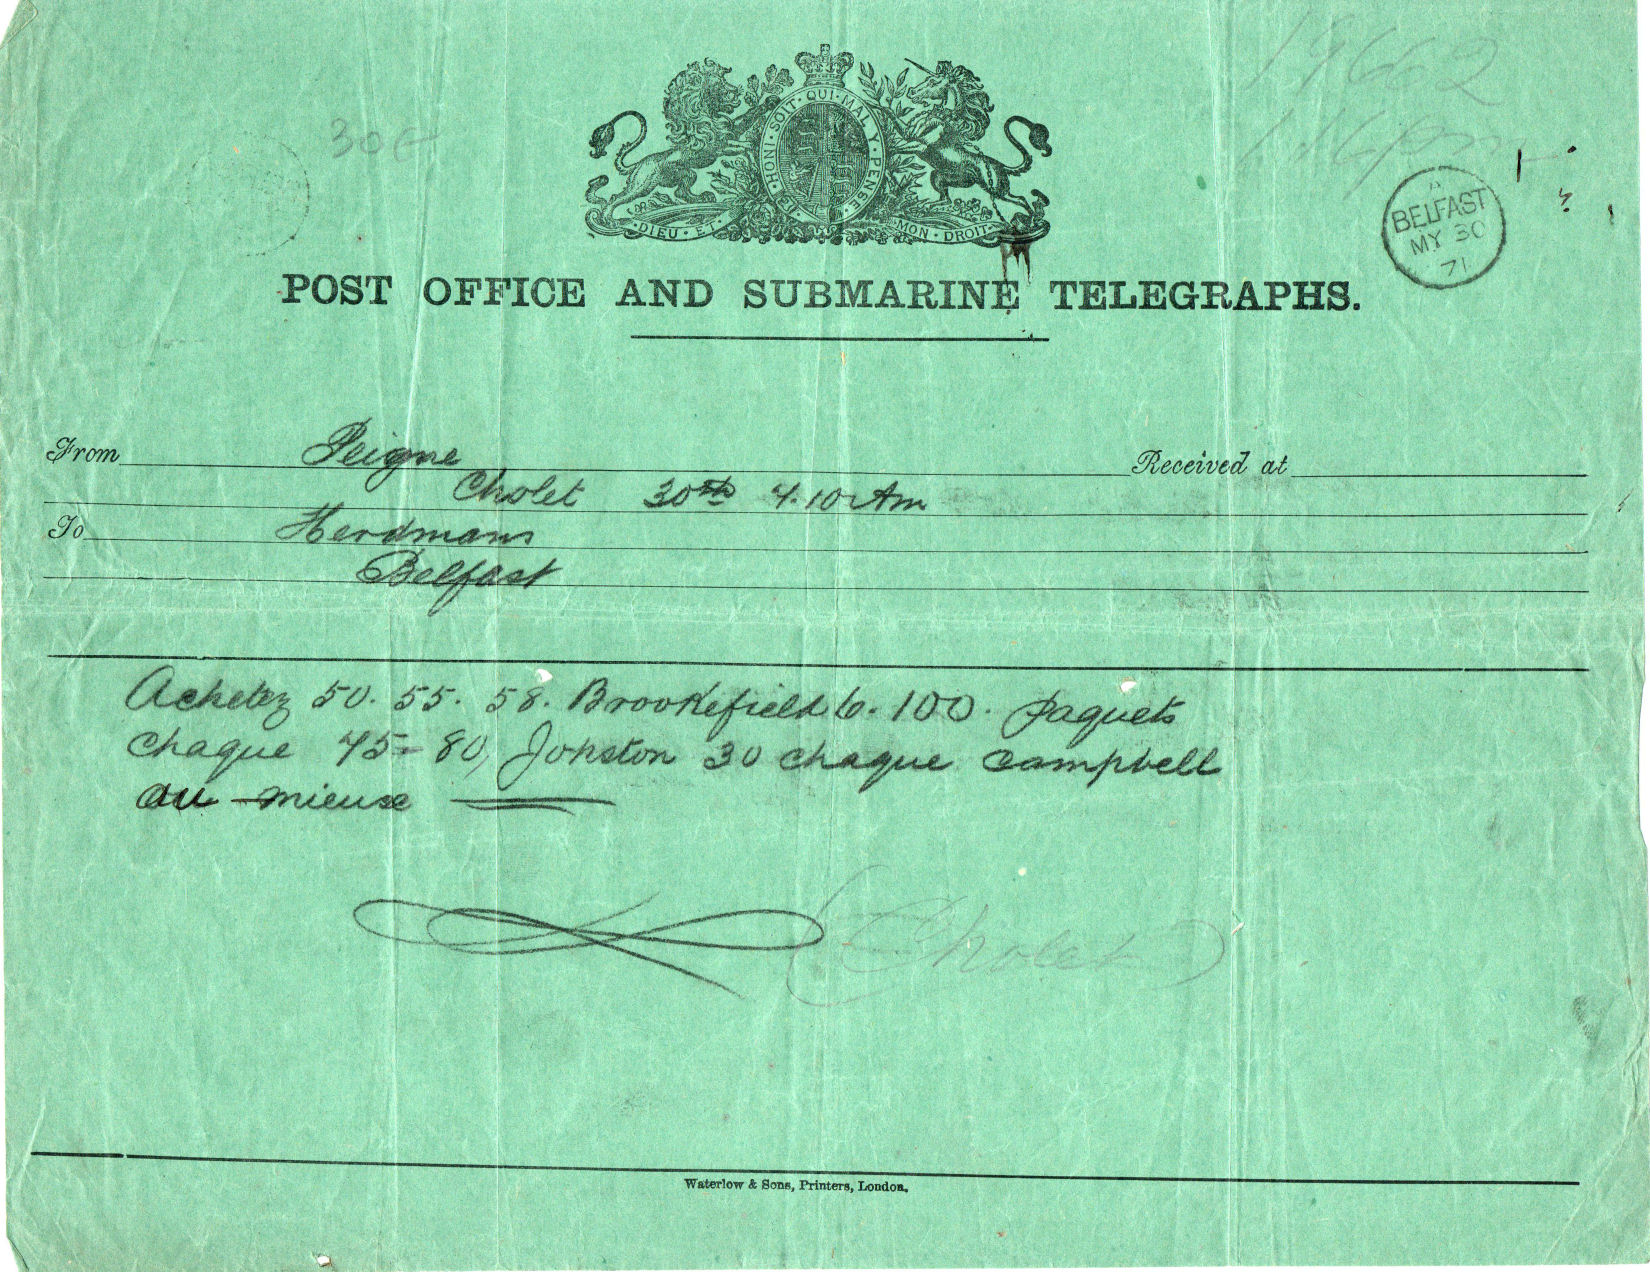 PO & Submarine Telegraph Co. 1871 Dublin form